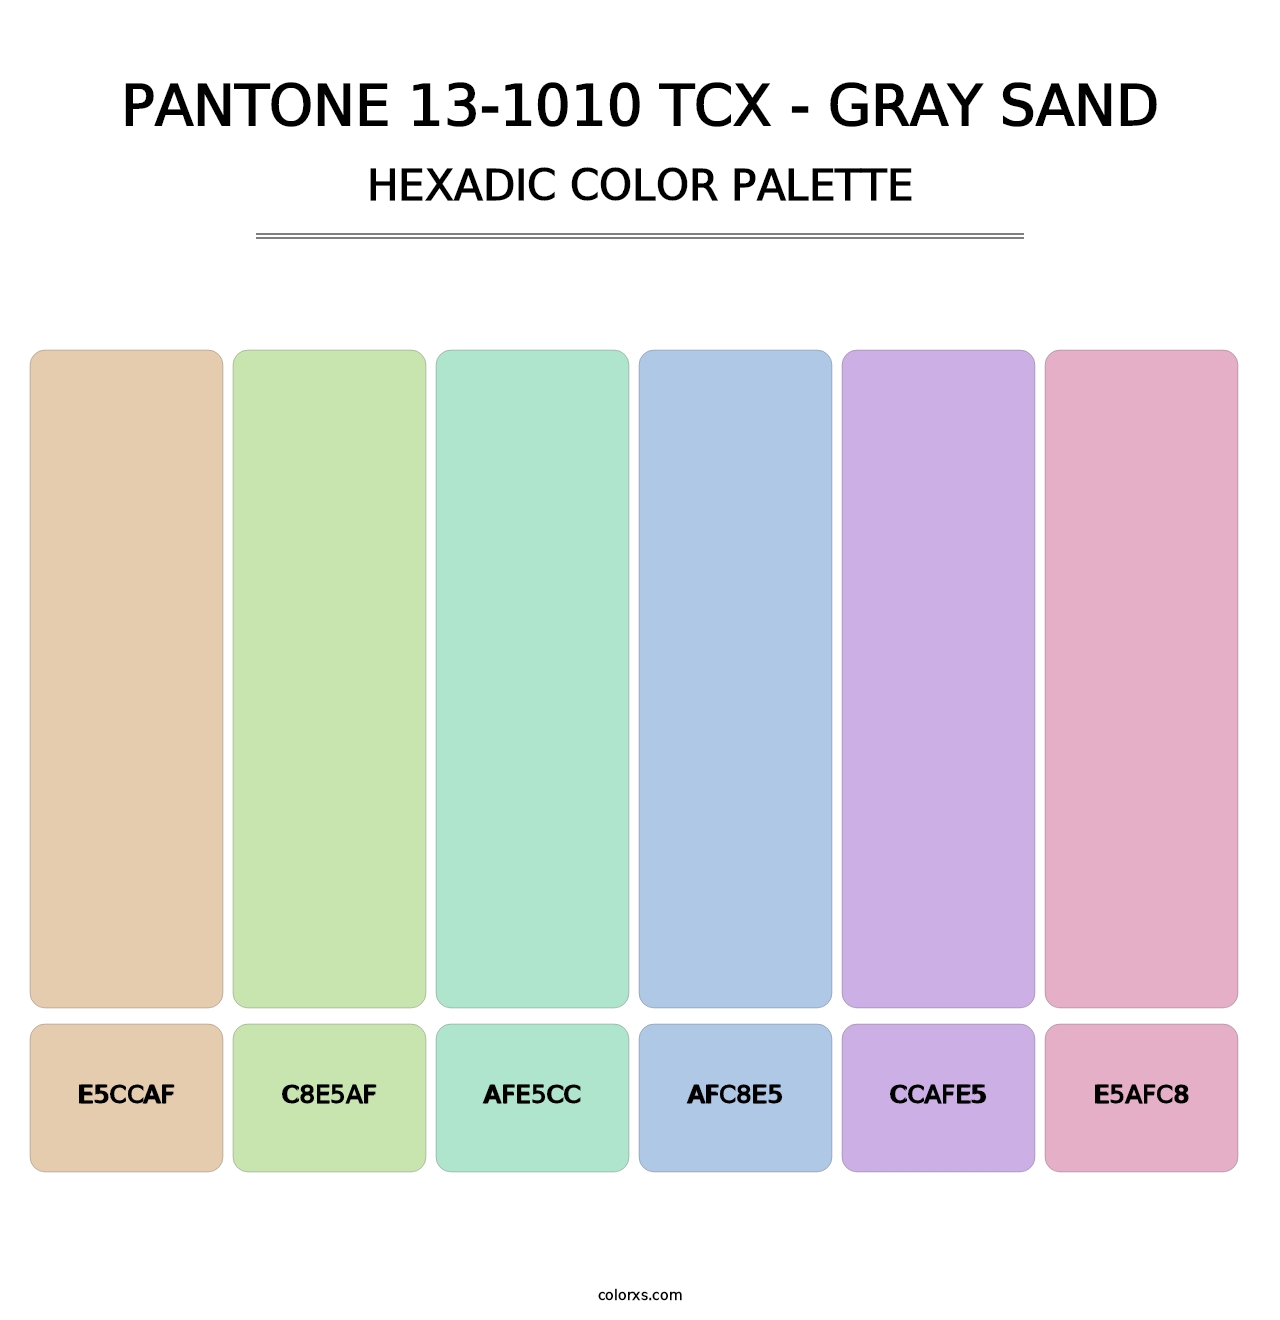 PANTONE 13-1010 TCX - Gray Sand - Hexadic Color Palette